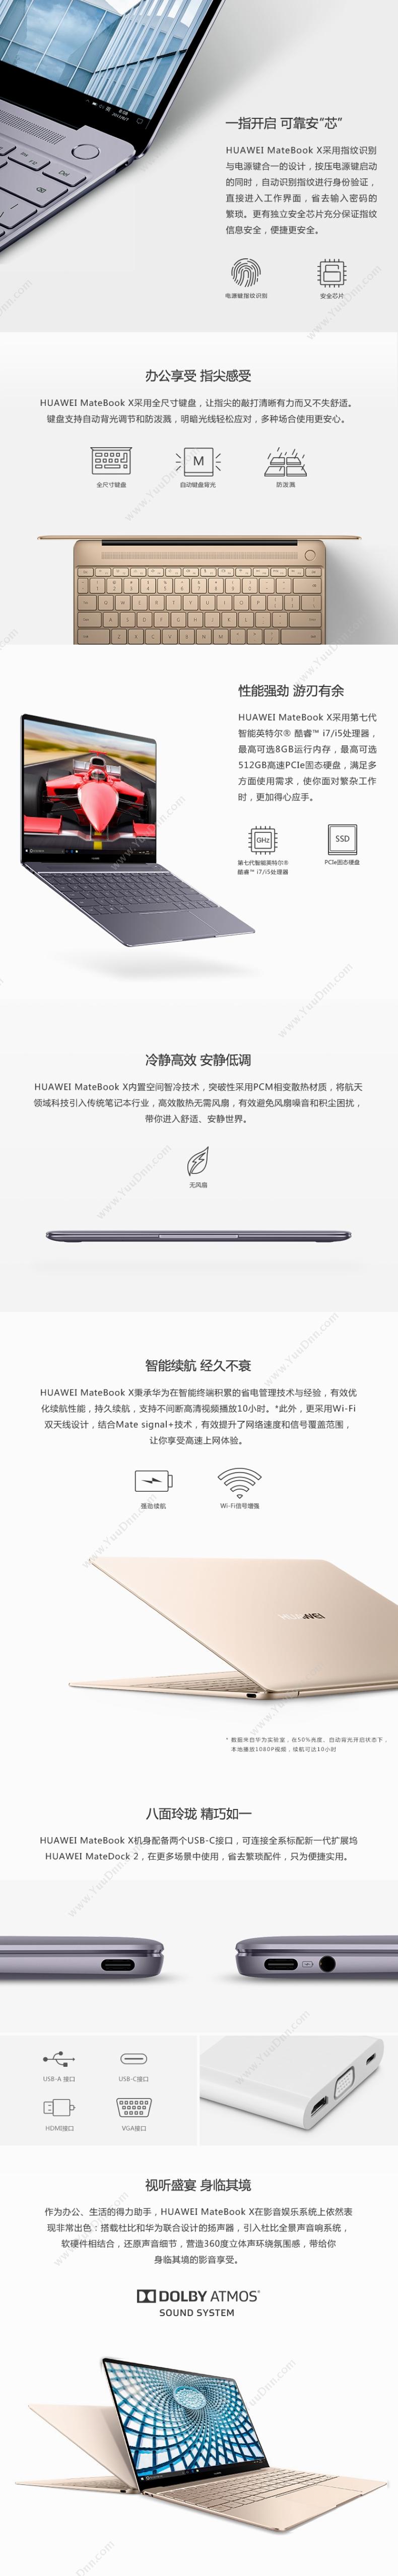 华为 Huawei WT-W19  MateBook X（金）  i7-7500U/集成/8GB/512GB/集显/无光驱/LED/13.3英寸/2年保修/DOS 笔记本